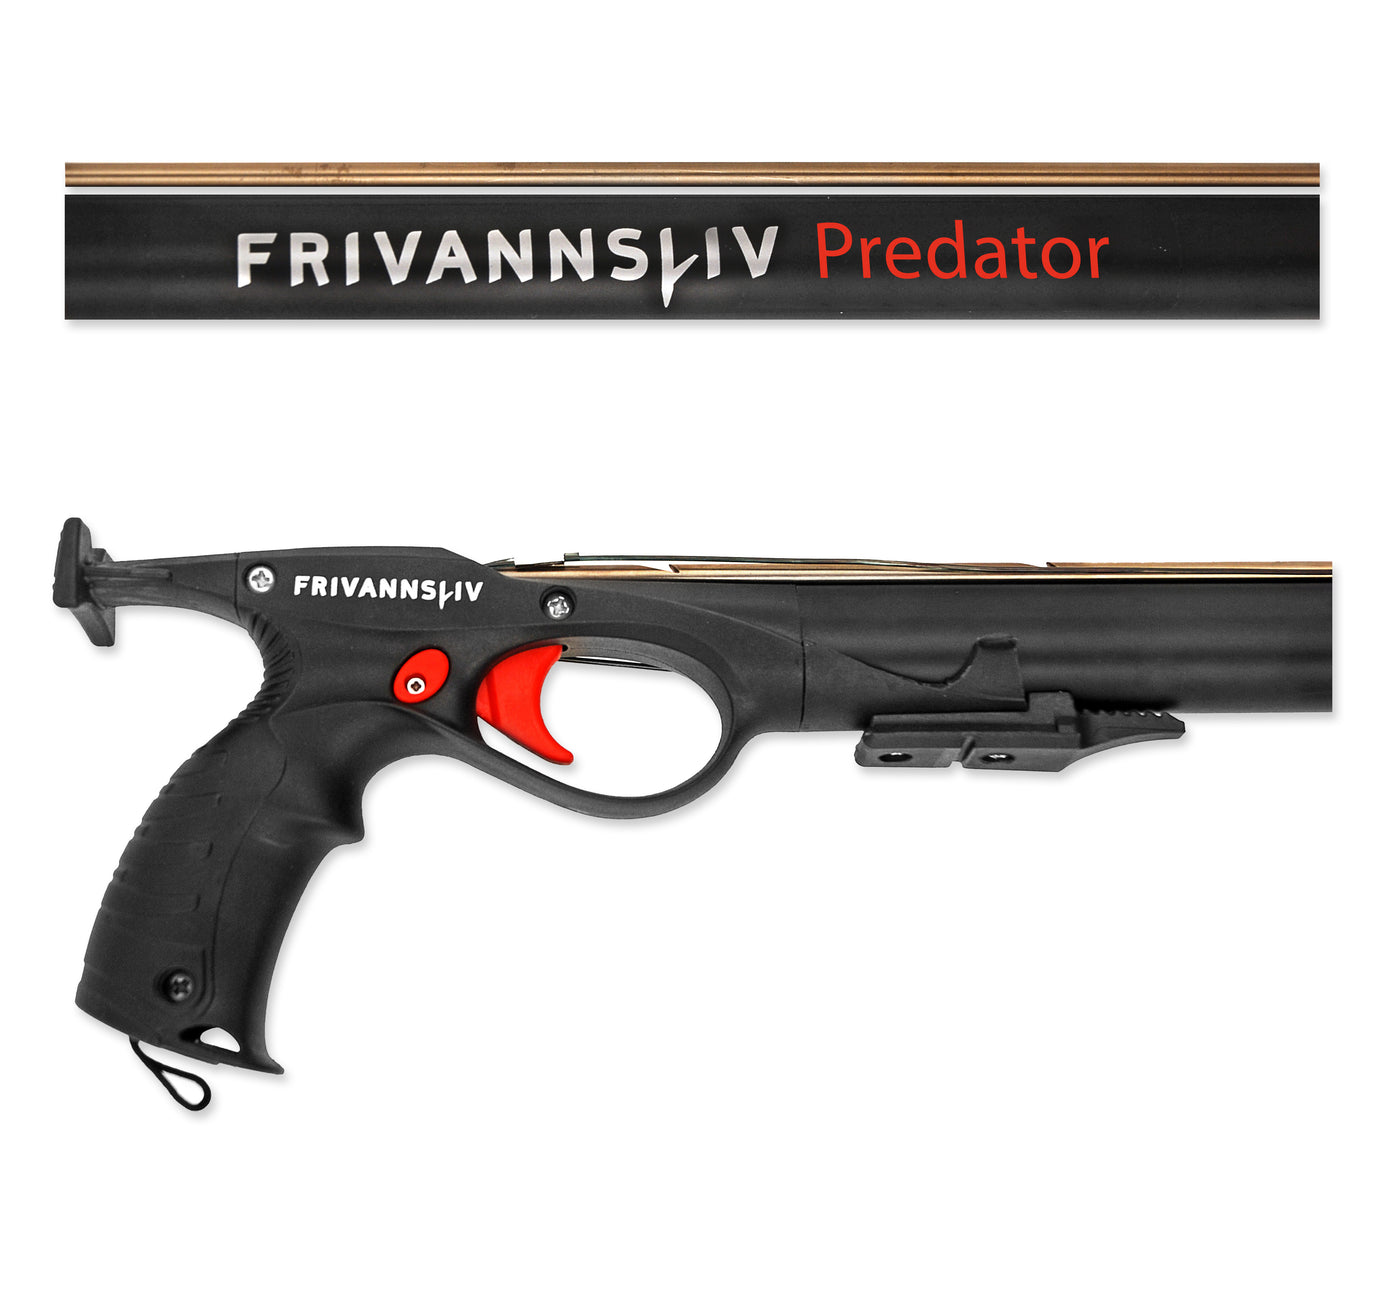 Frivannsliv® Predator